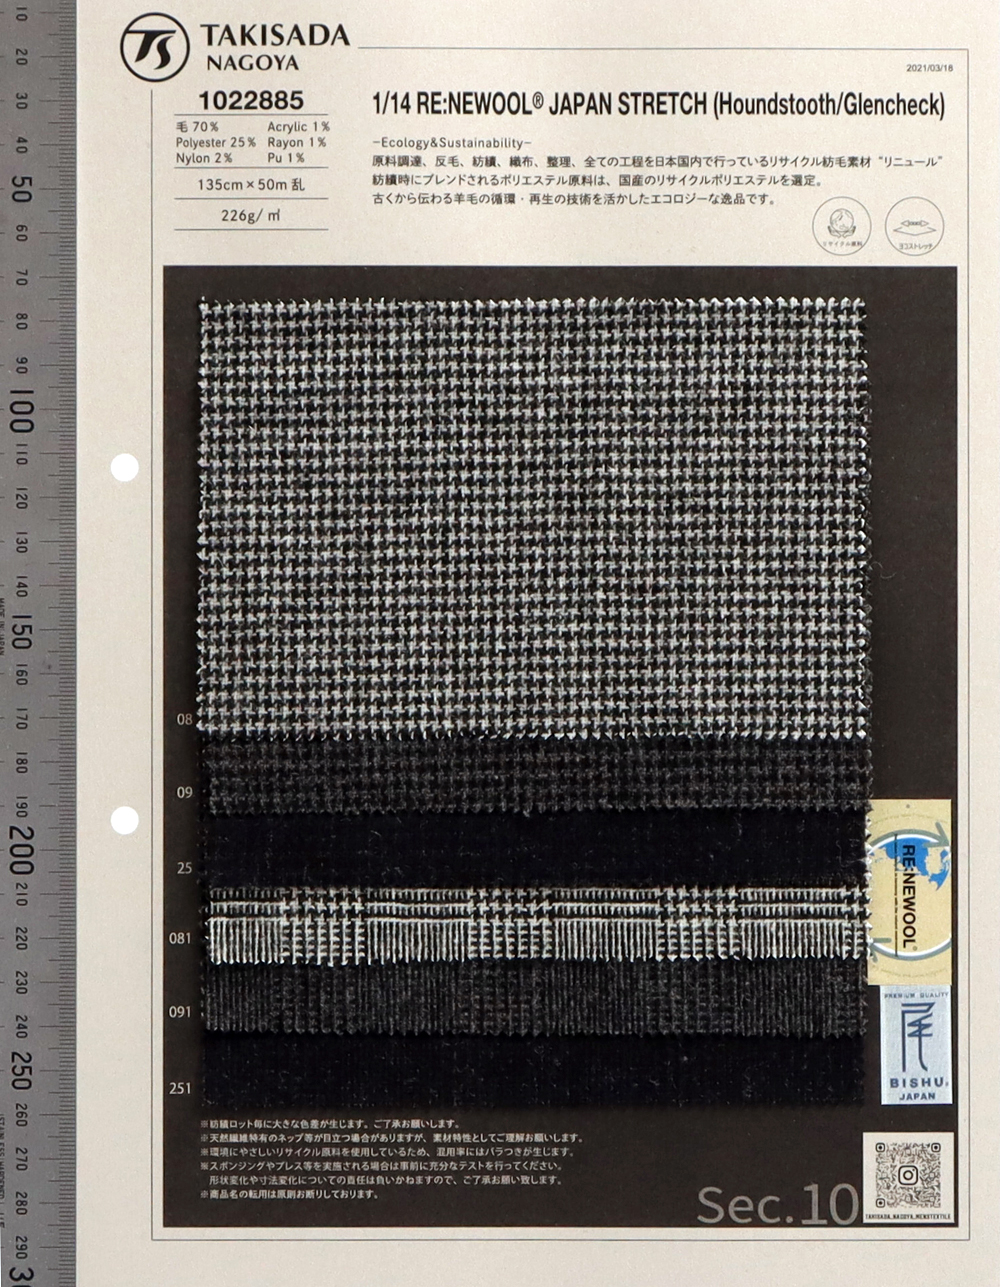 1022885 RE:NEWOOL® JAPAN Stretch Flannel Flat Check Series[Fabrication De Textile] Takisada Nagoya